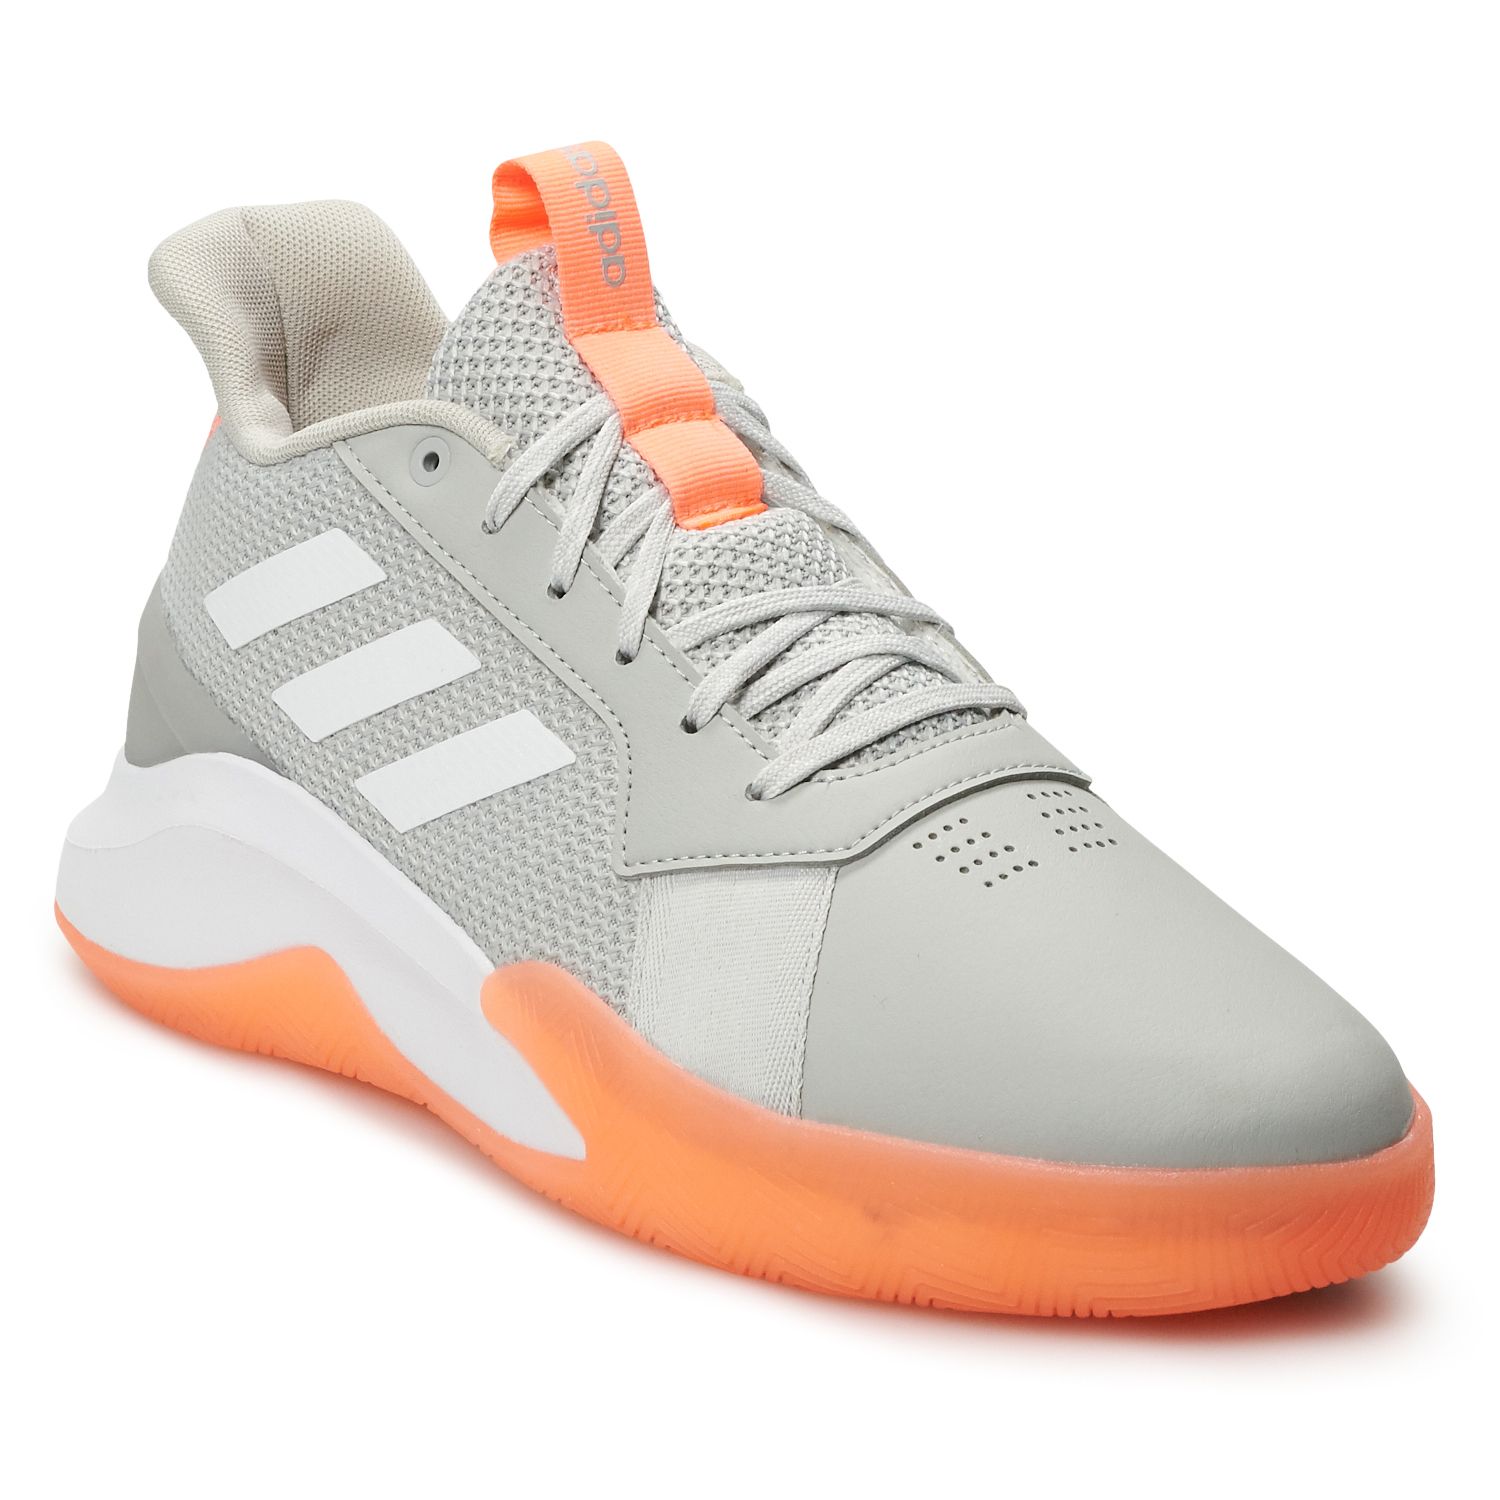 adidas men's run the game basketball shoe